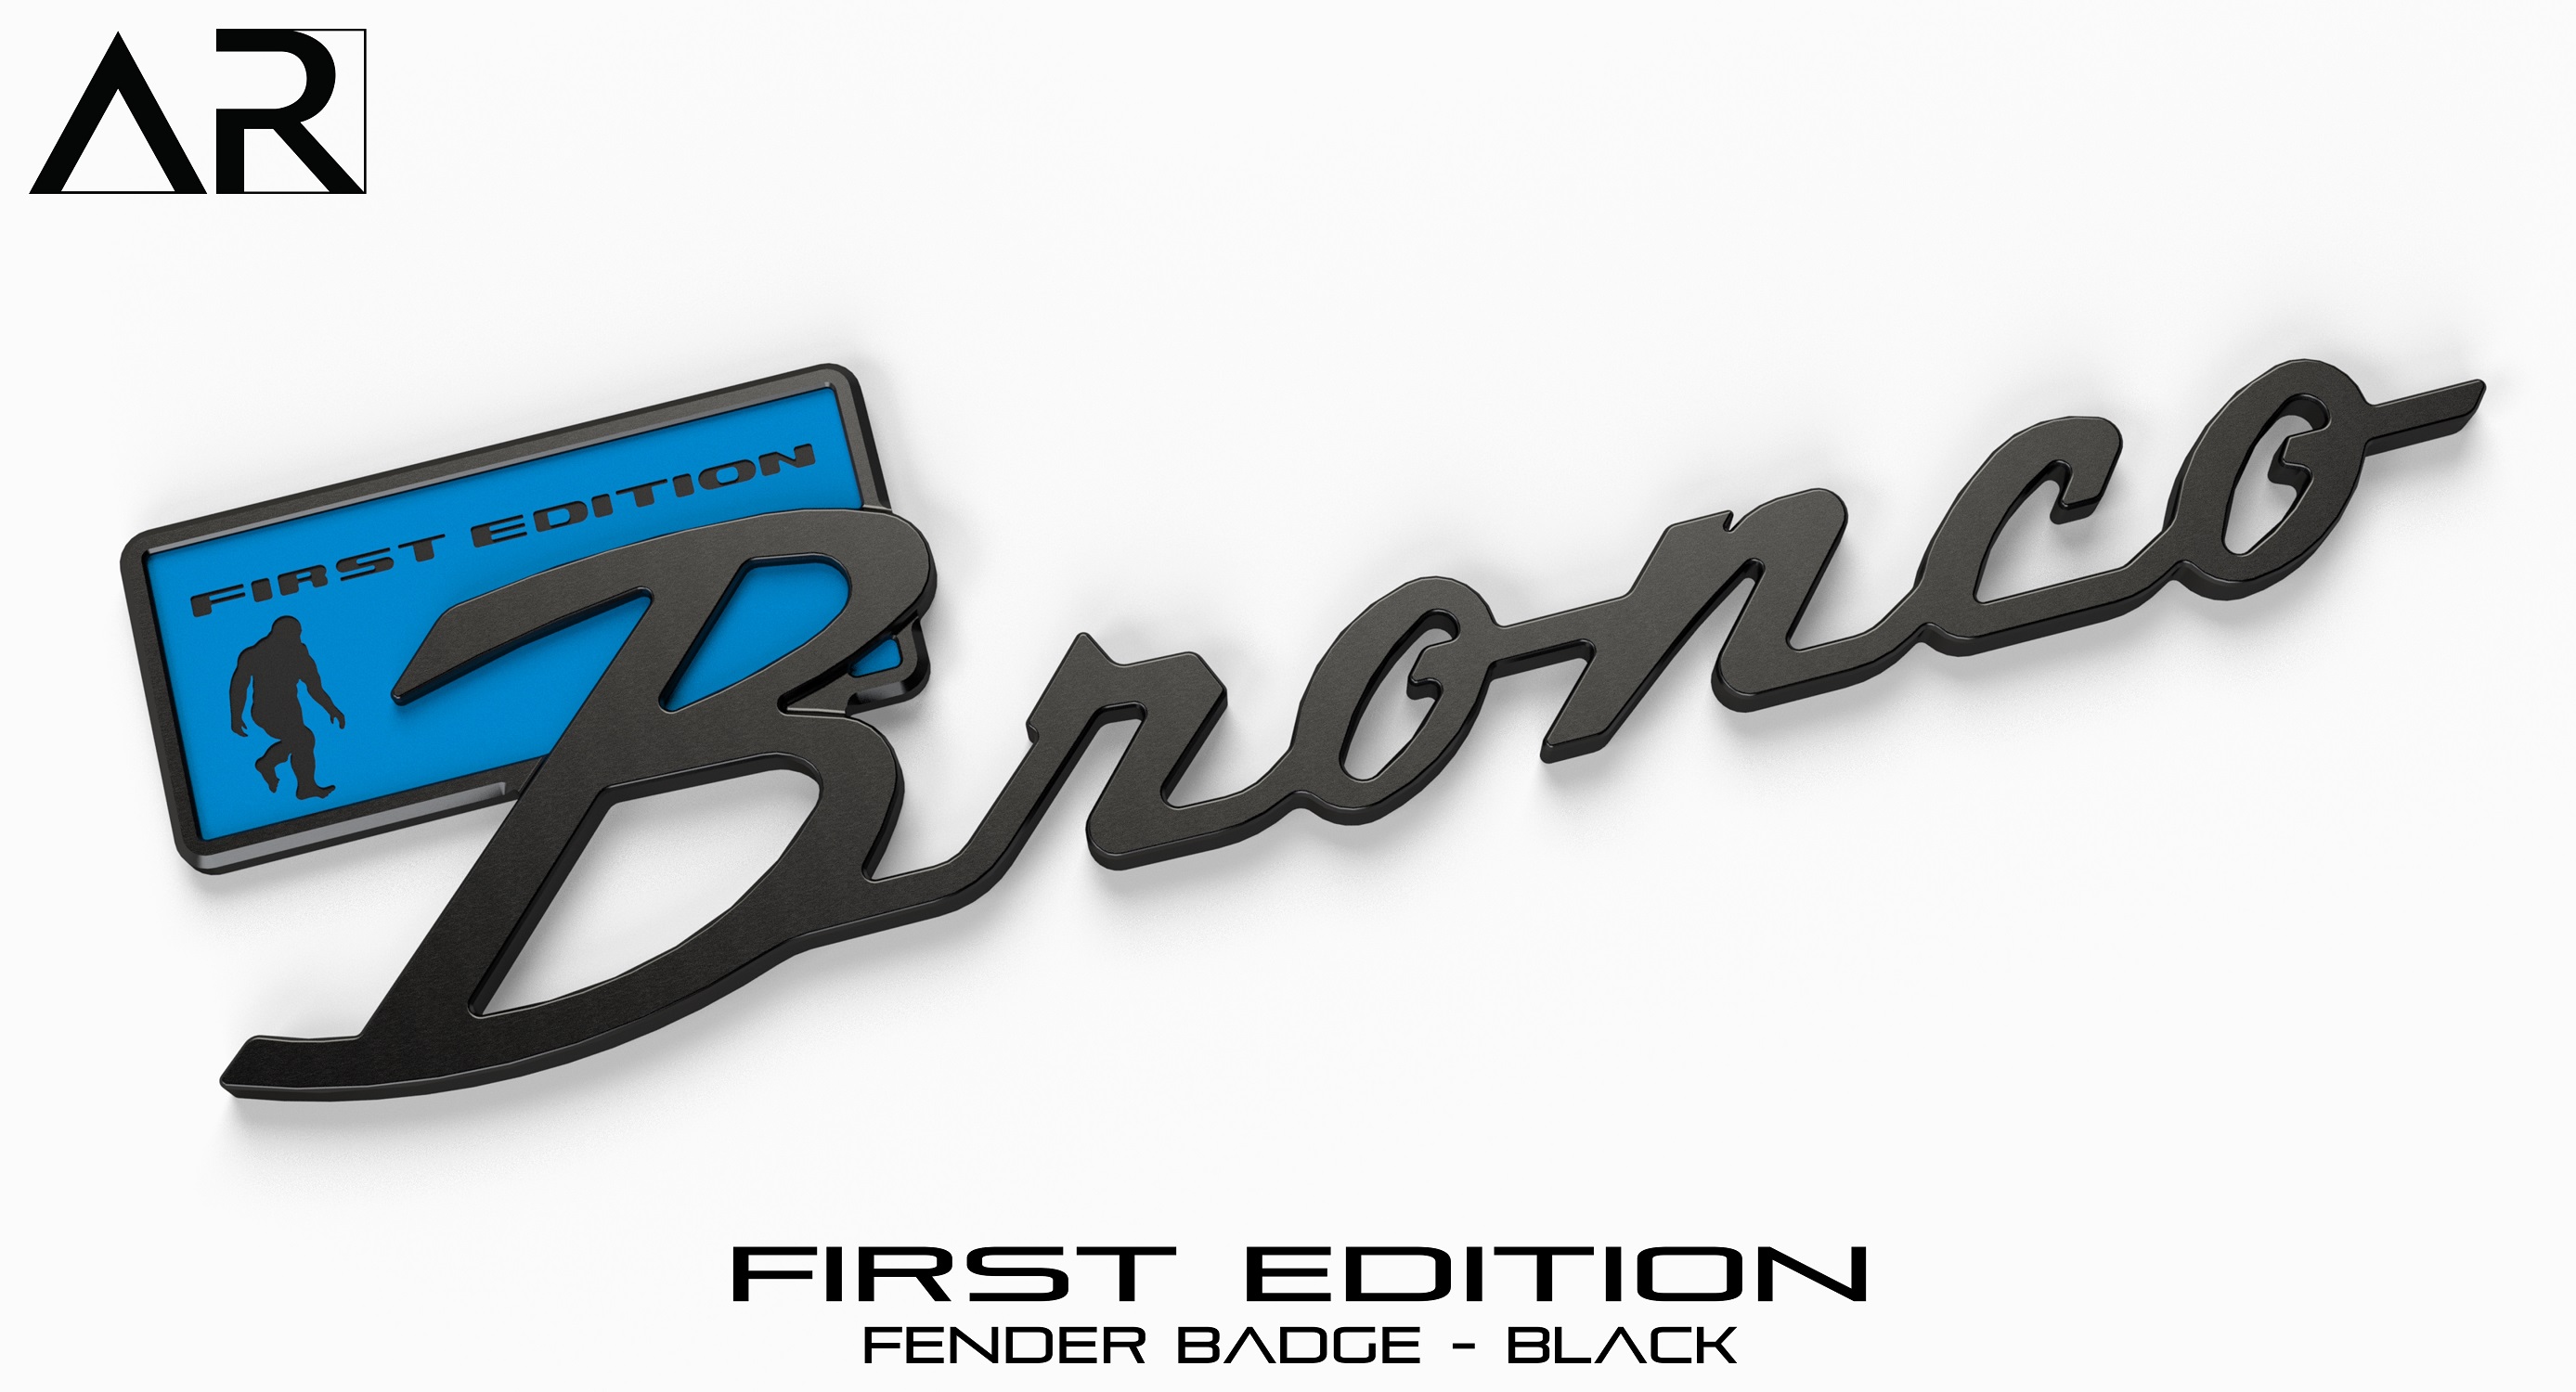 Ford Bronco AR | BRONCO CLASSIC DNA Fender Badge 1601003 - Fender Badge  - First Edition - Black